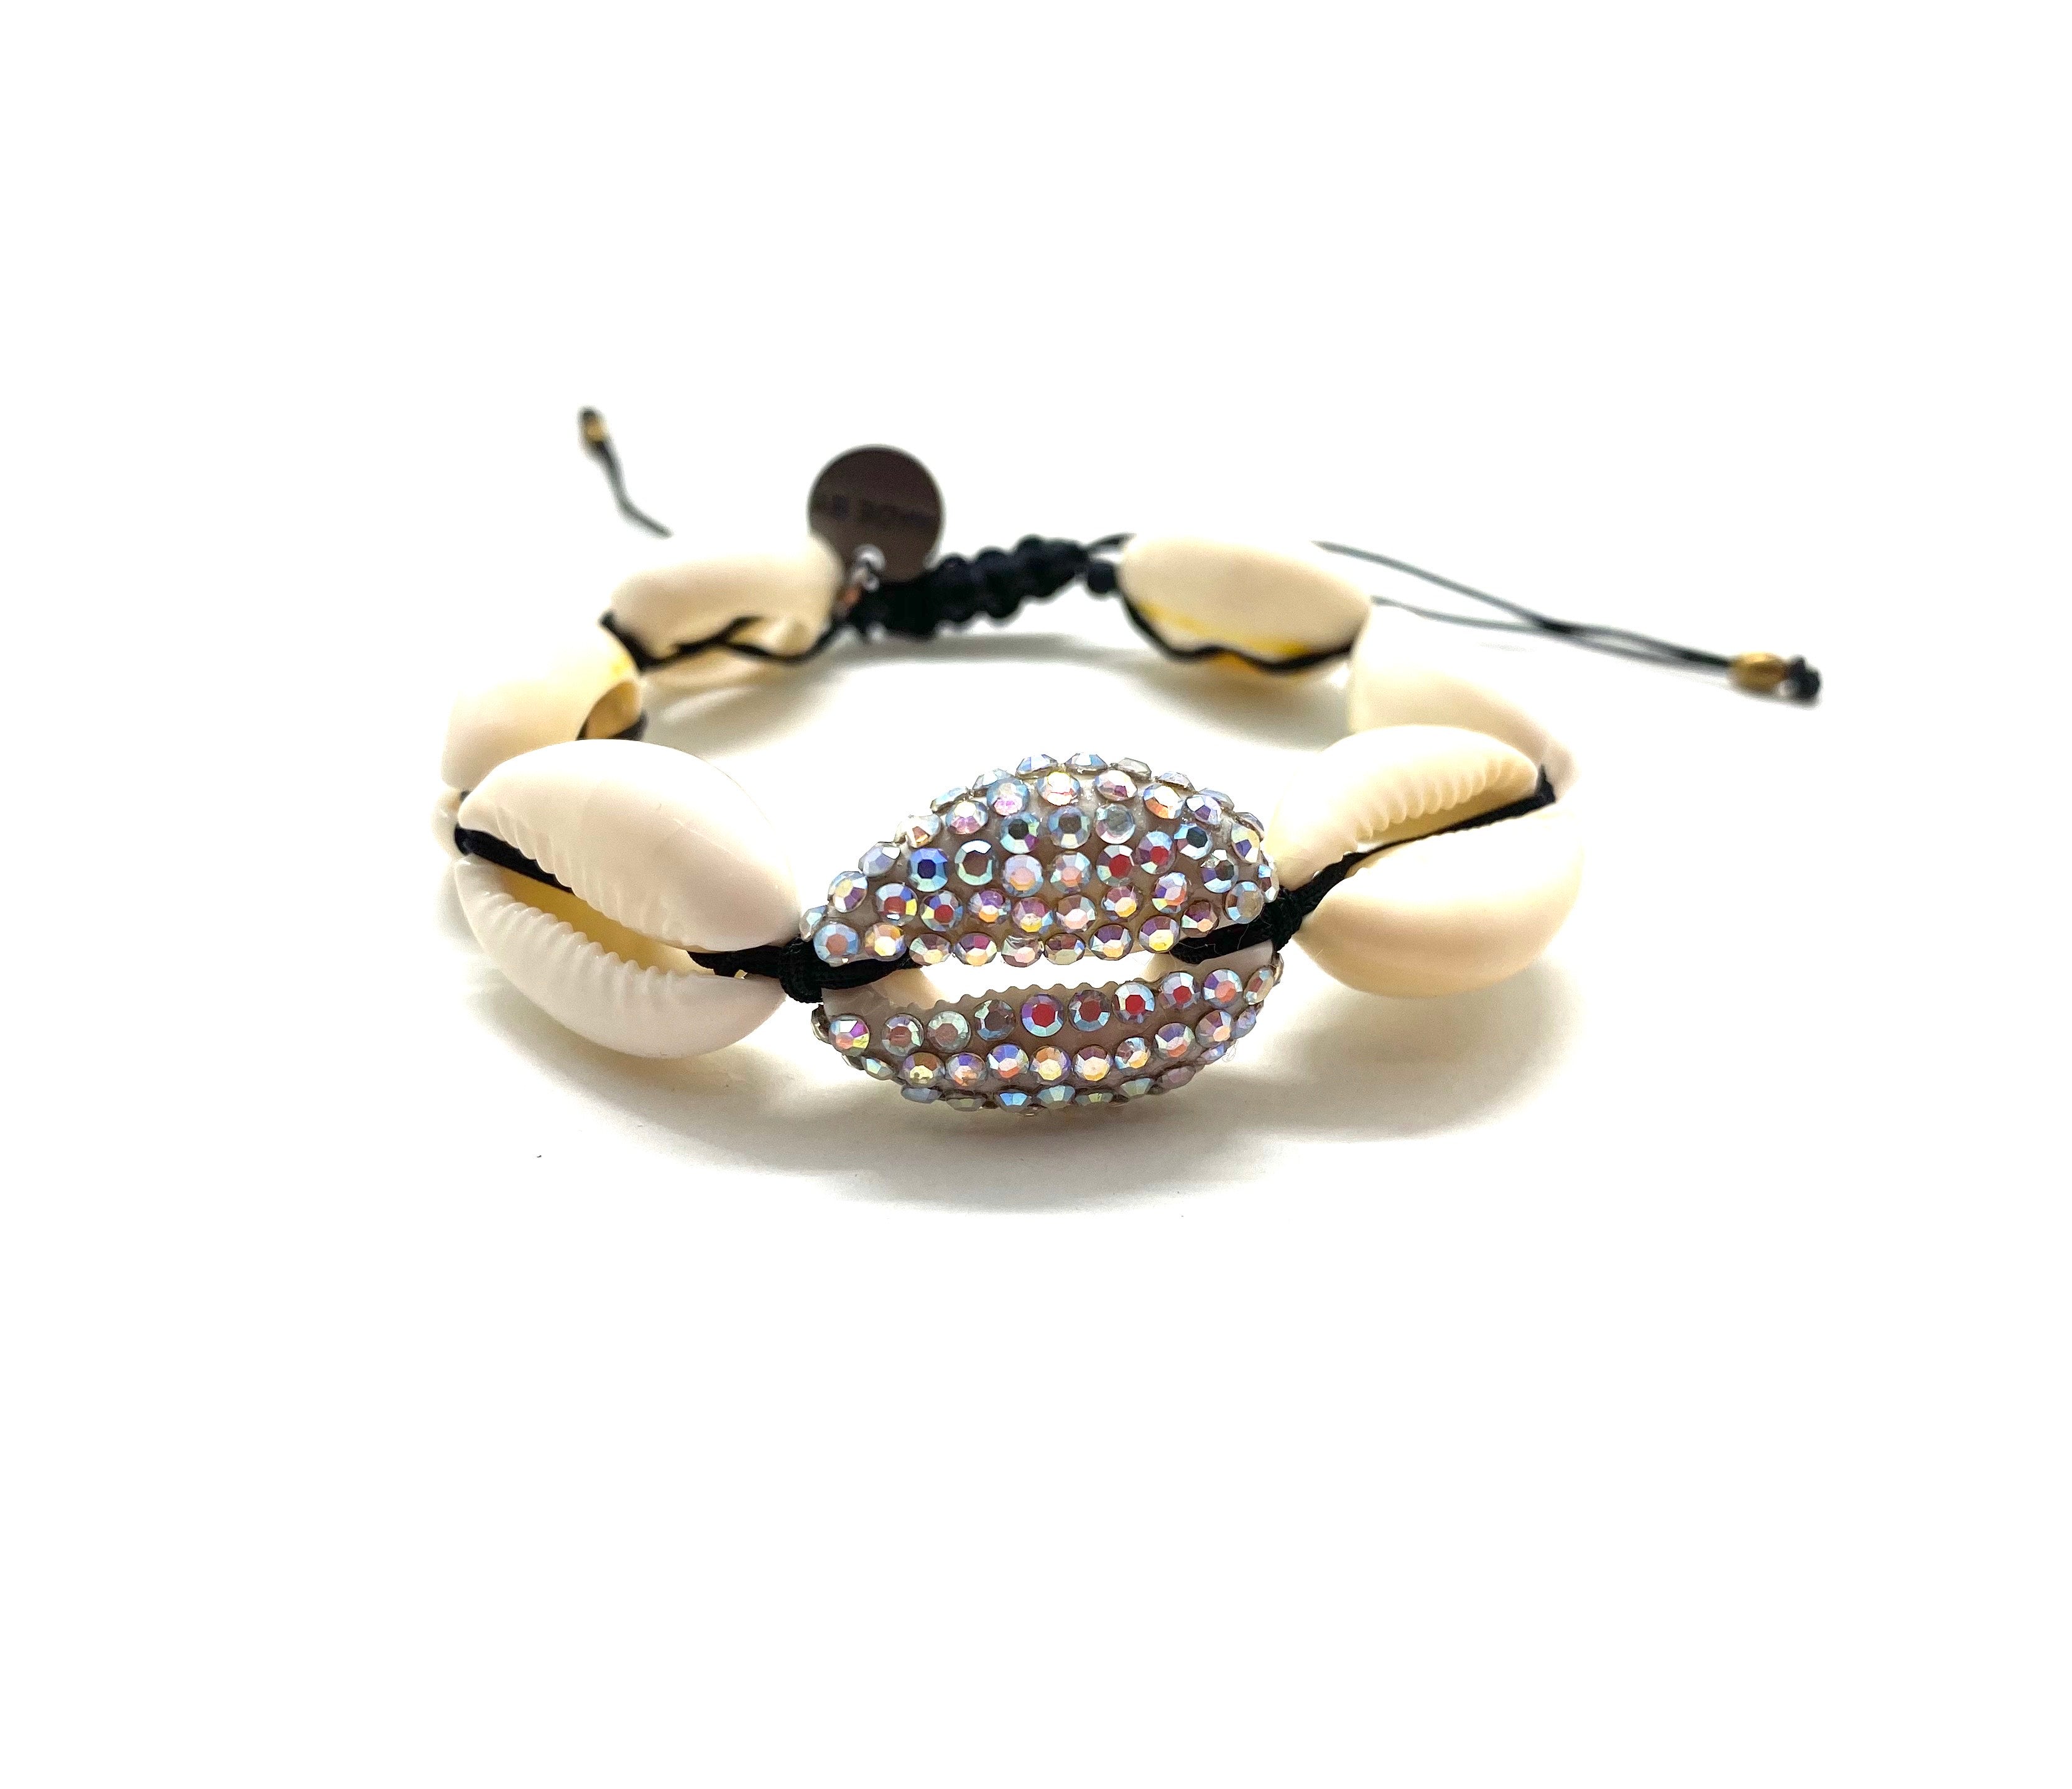 Natural shell bracelet, with Swarovski studded central shell, black cord